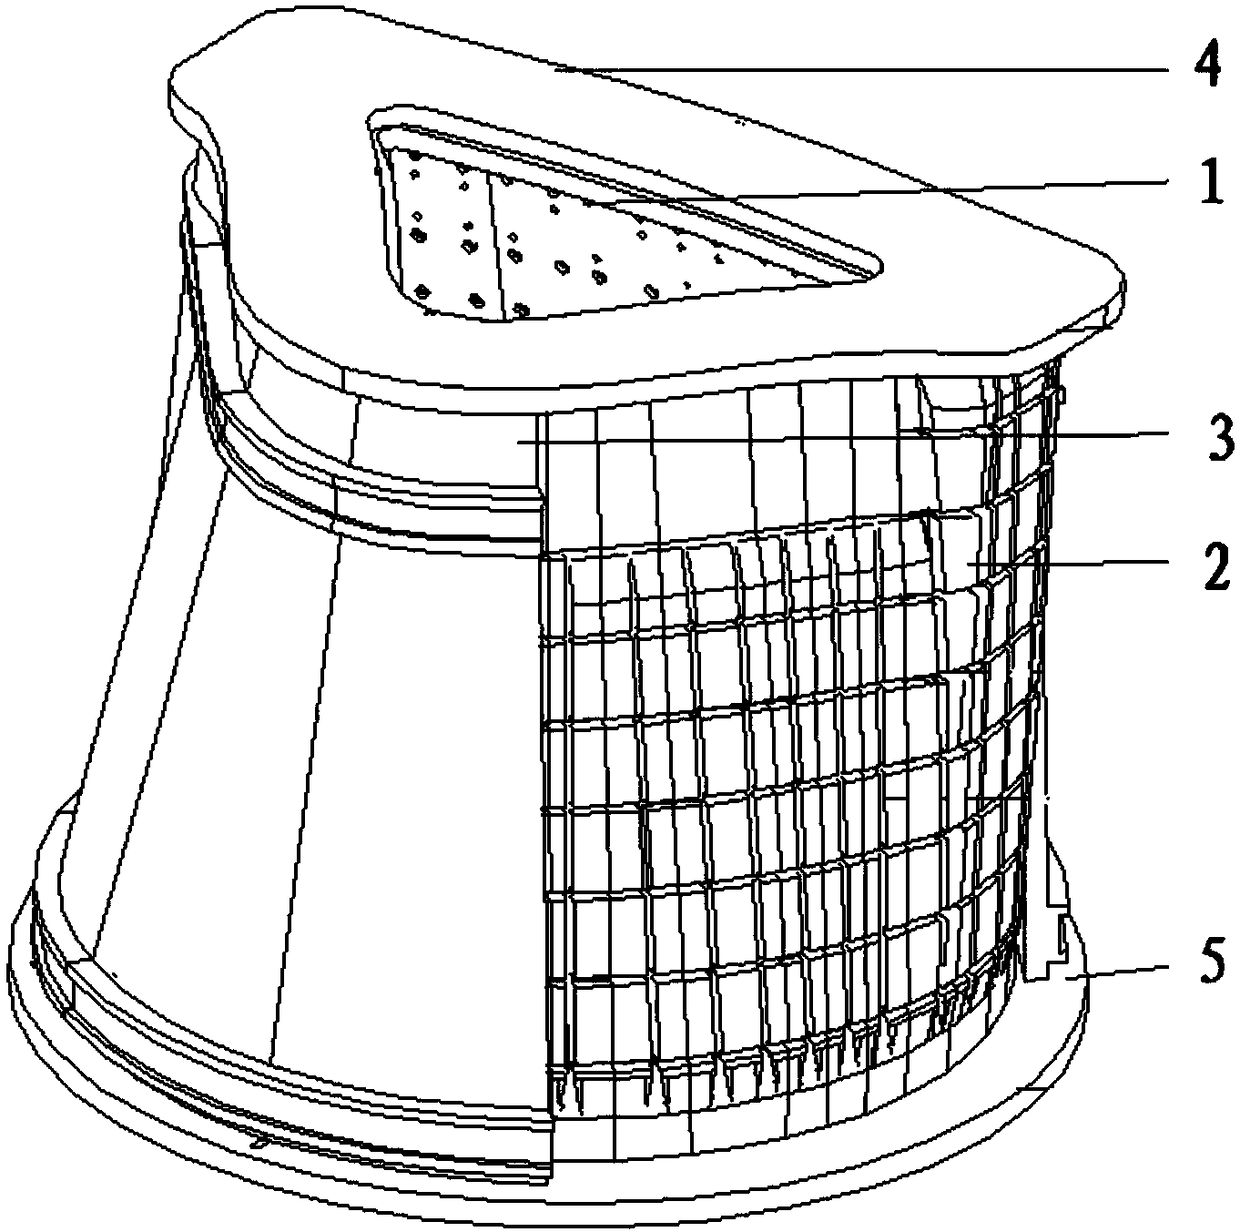 Forming method of heterogeneous composite grid skin cabin